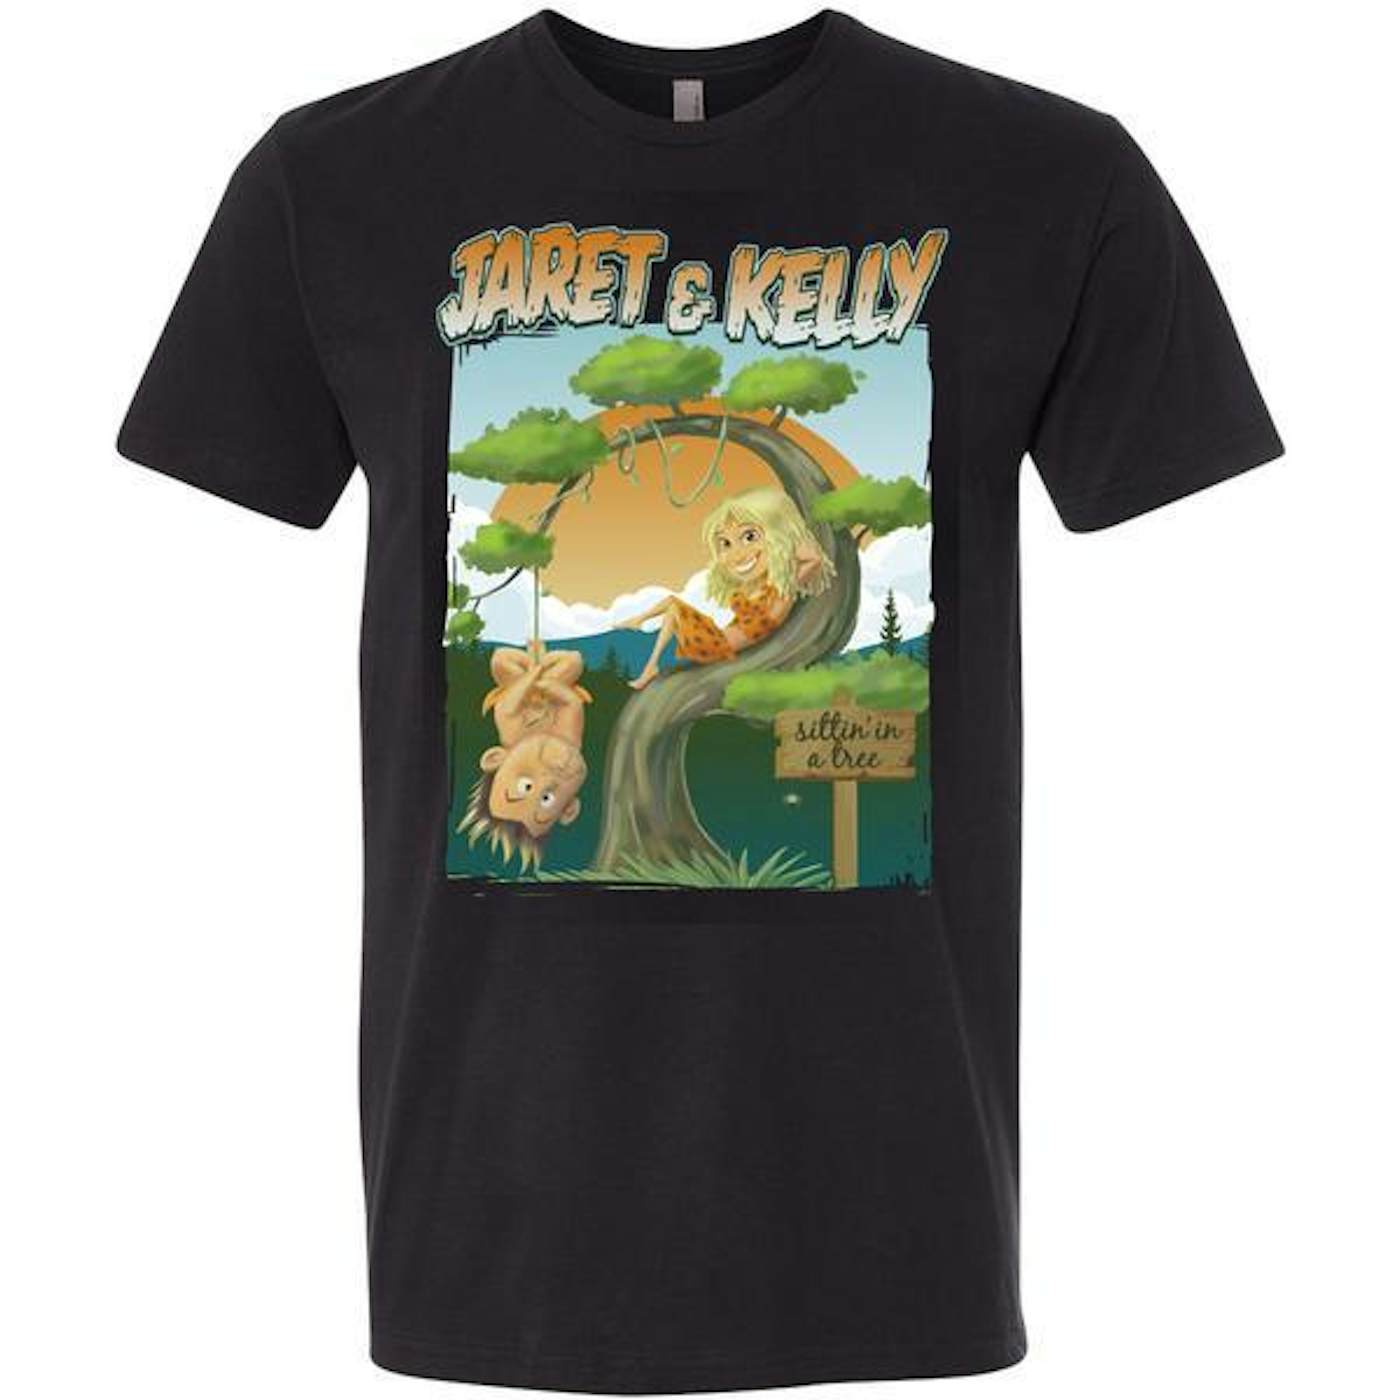 Jaret and Kelly - Exclusive Album Art Shirt